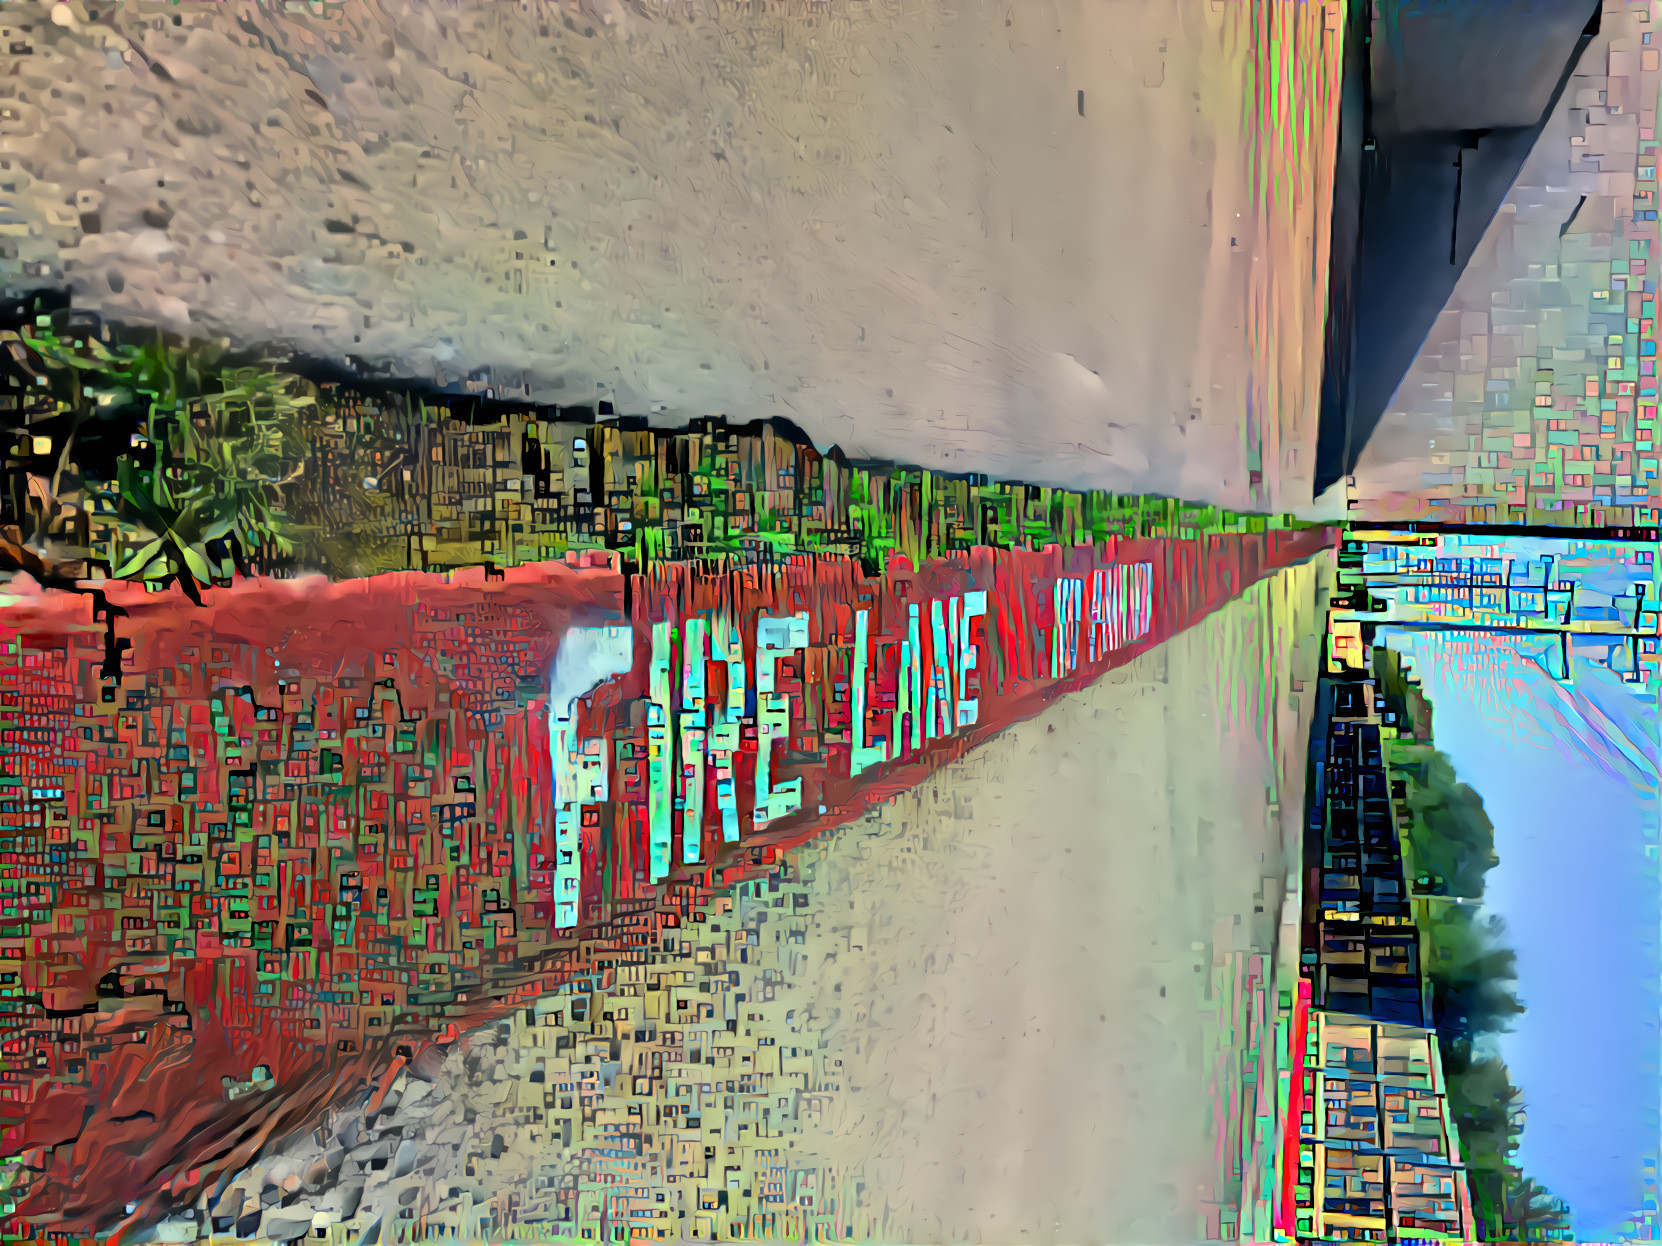 Surreal Microcubic Fire Lane